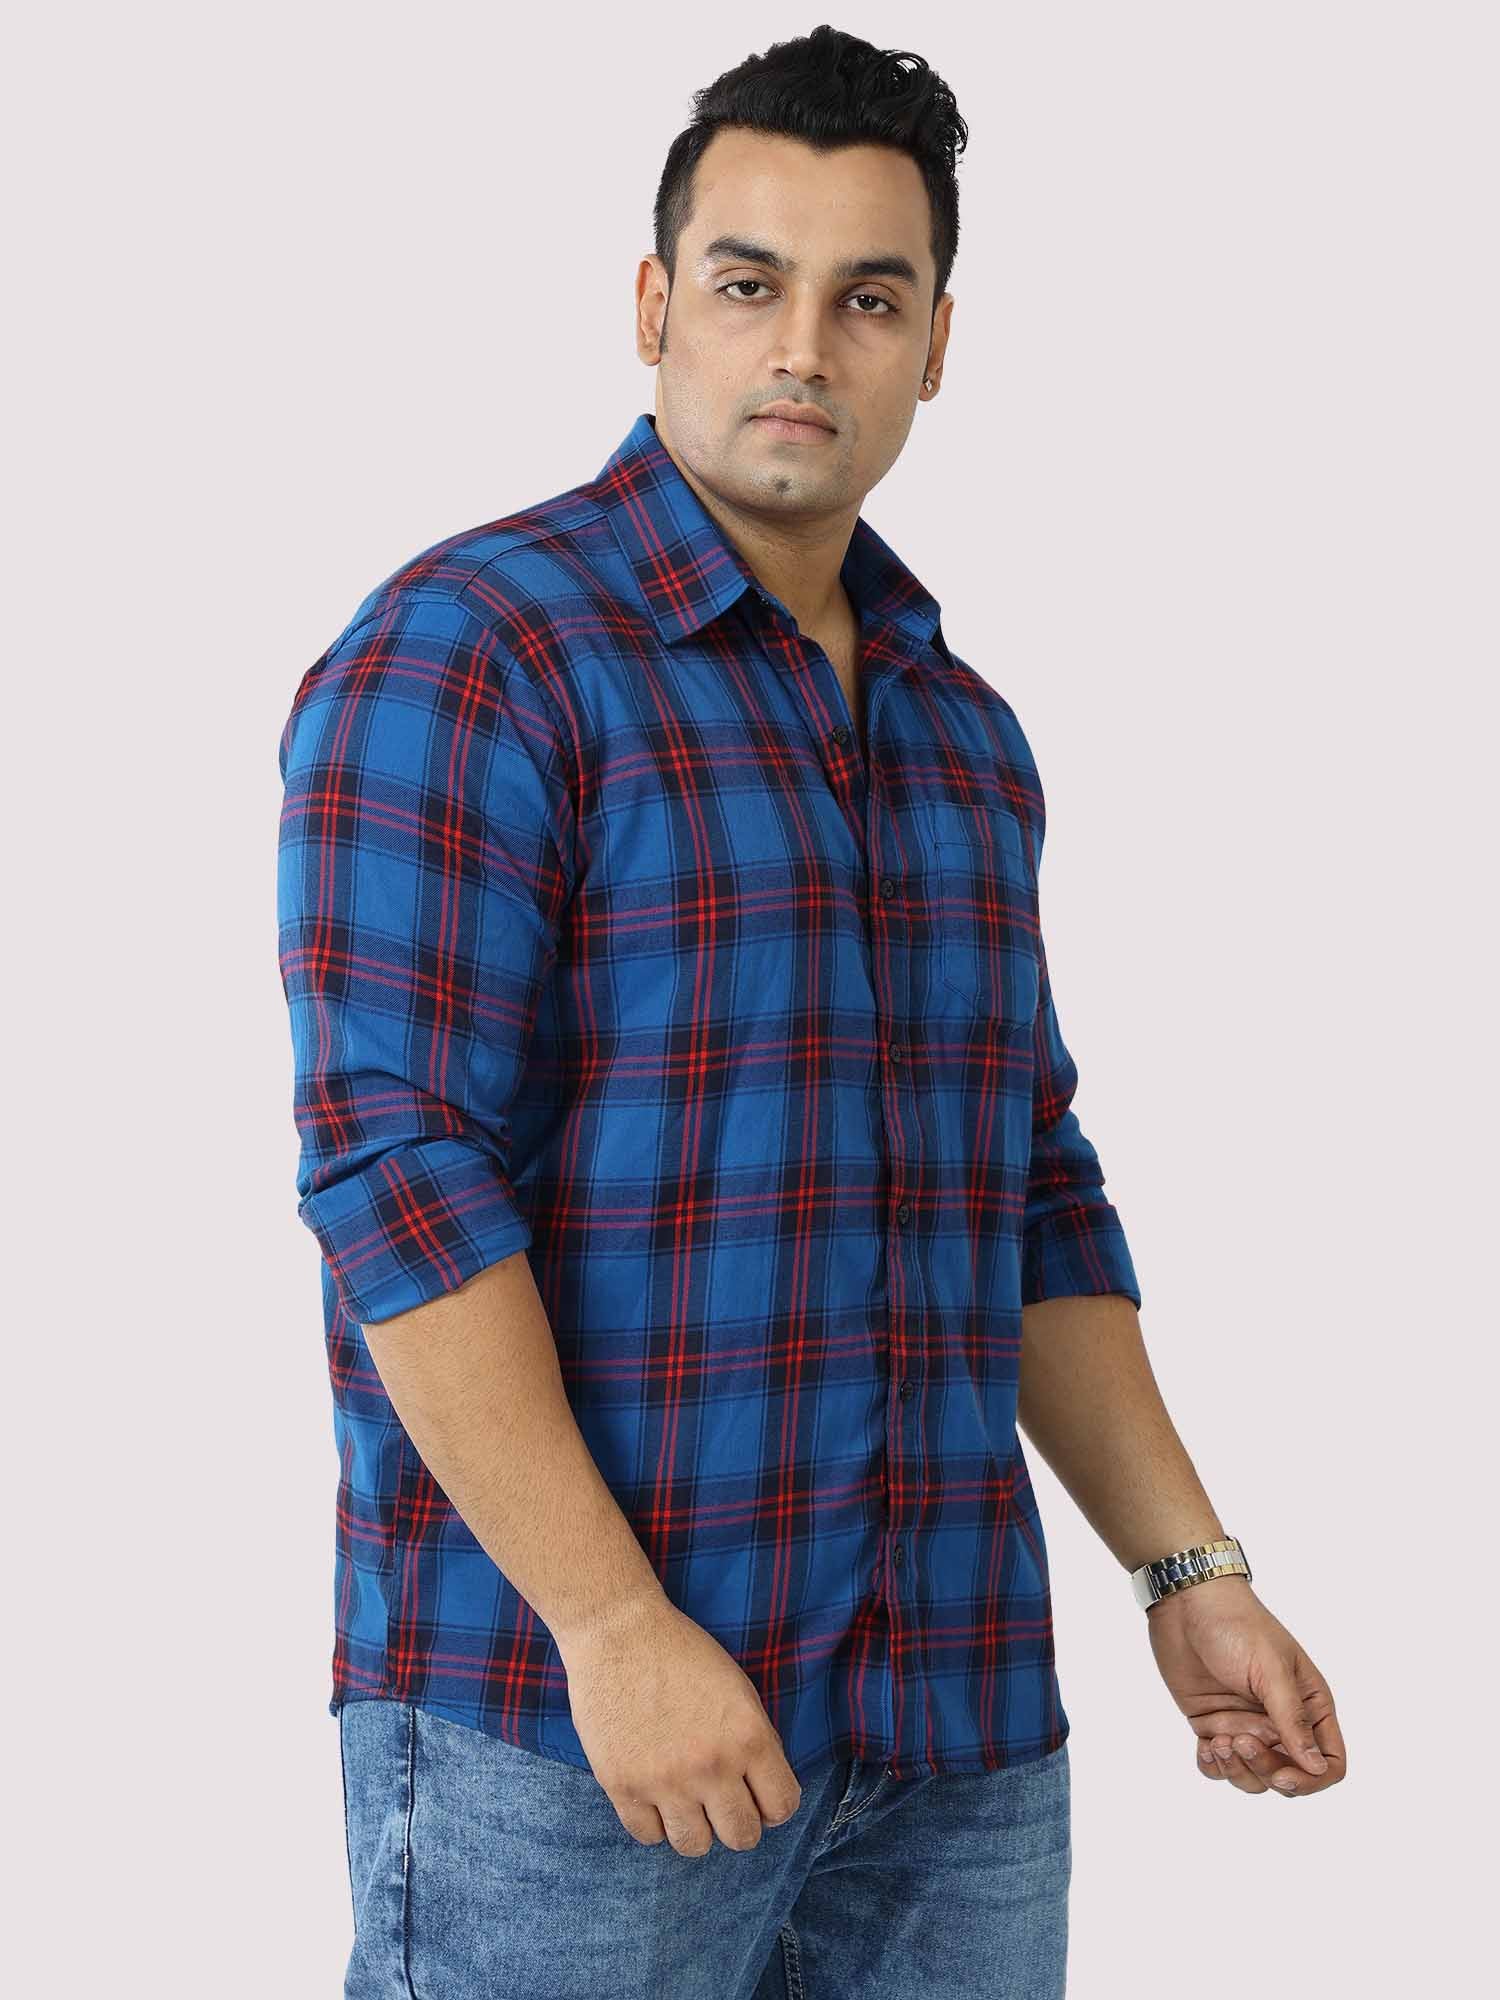 Blue Checkered Shirt Men's Plus Size